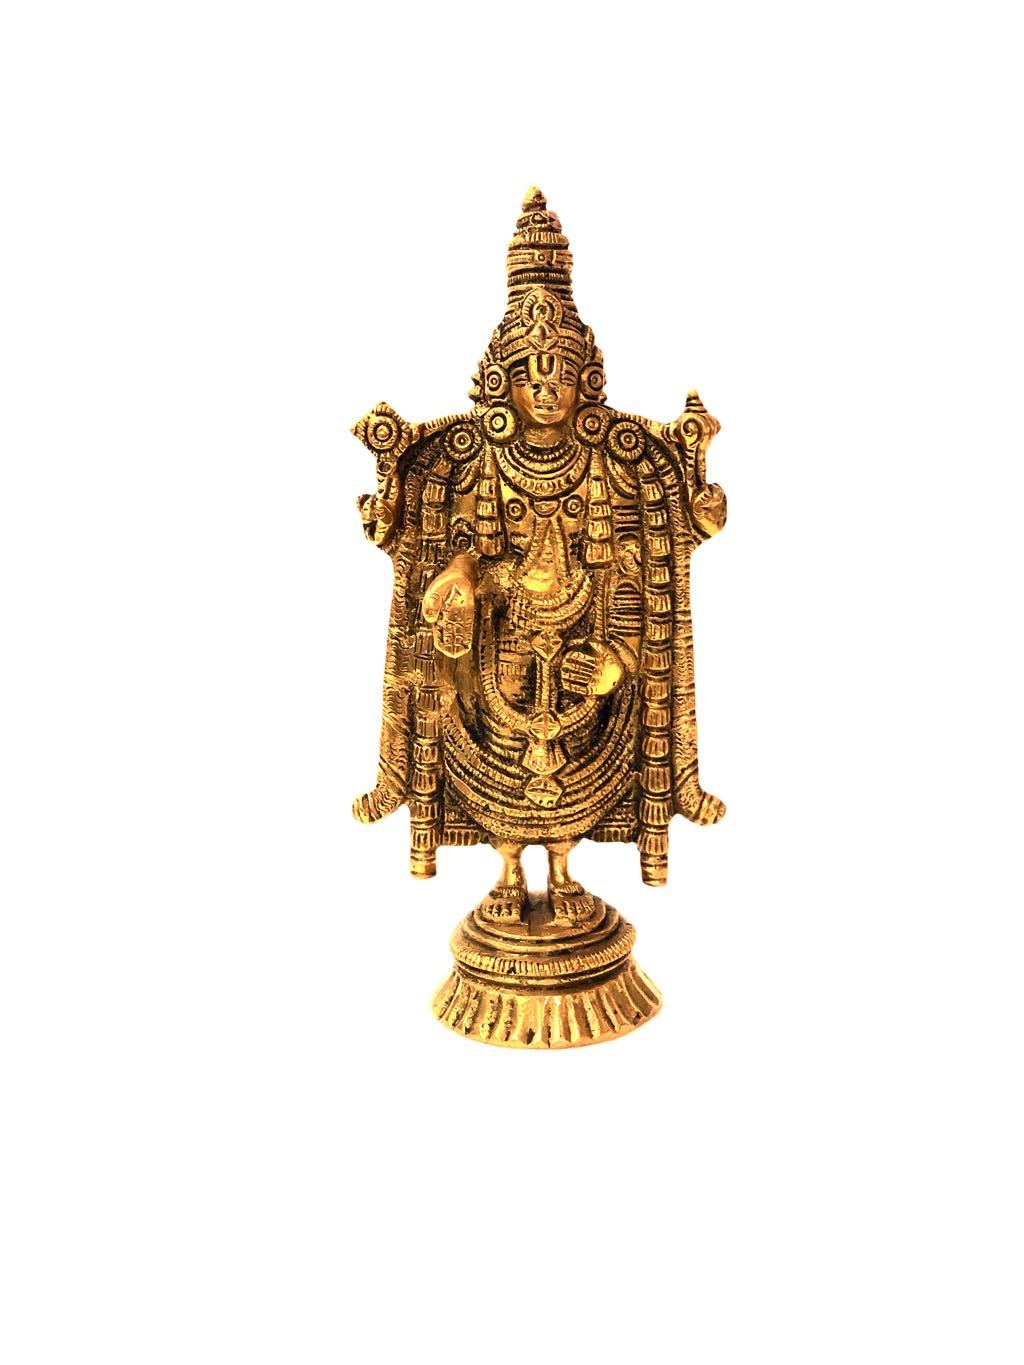 Tirupati Balaji Presiding Deity 'Lord Venkateswara' Brass Tamrapatra - Tamrapatra